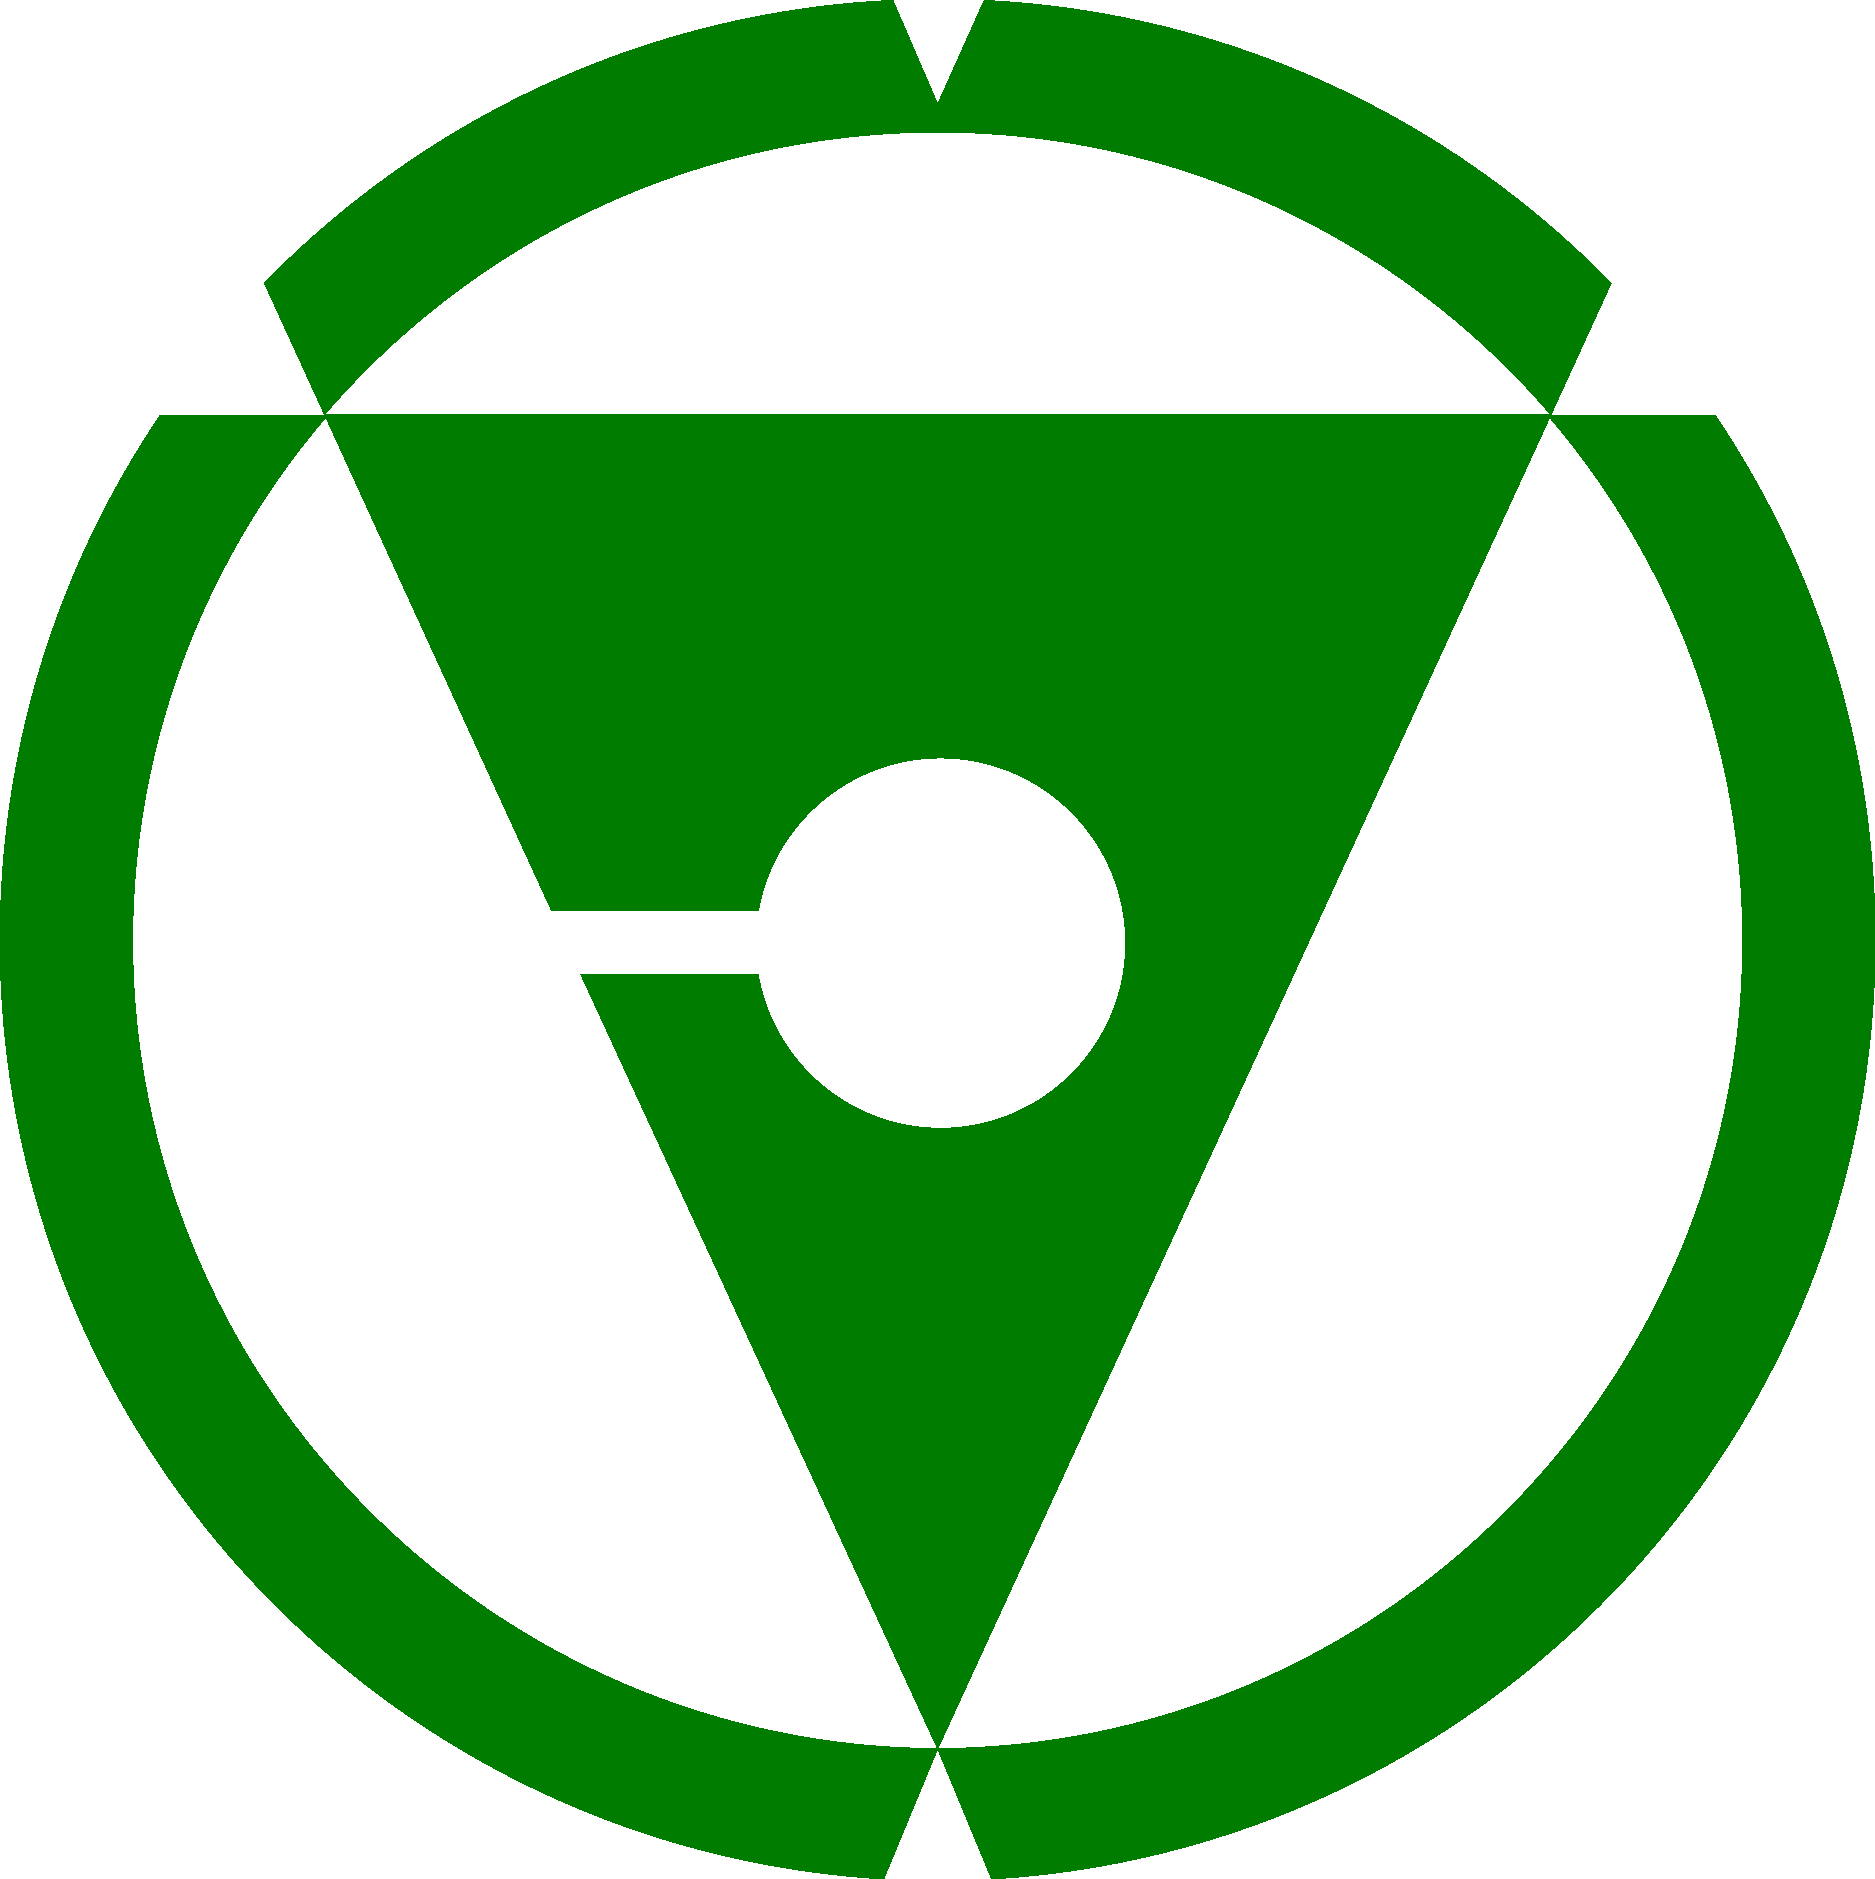 Emblem of Matsuno, Ehime Logo Vector